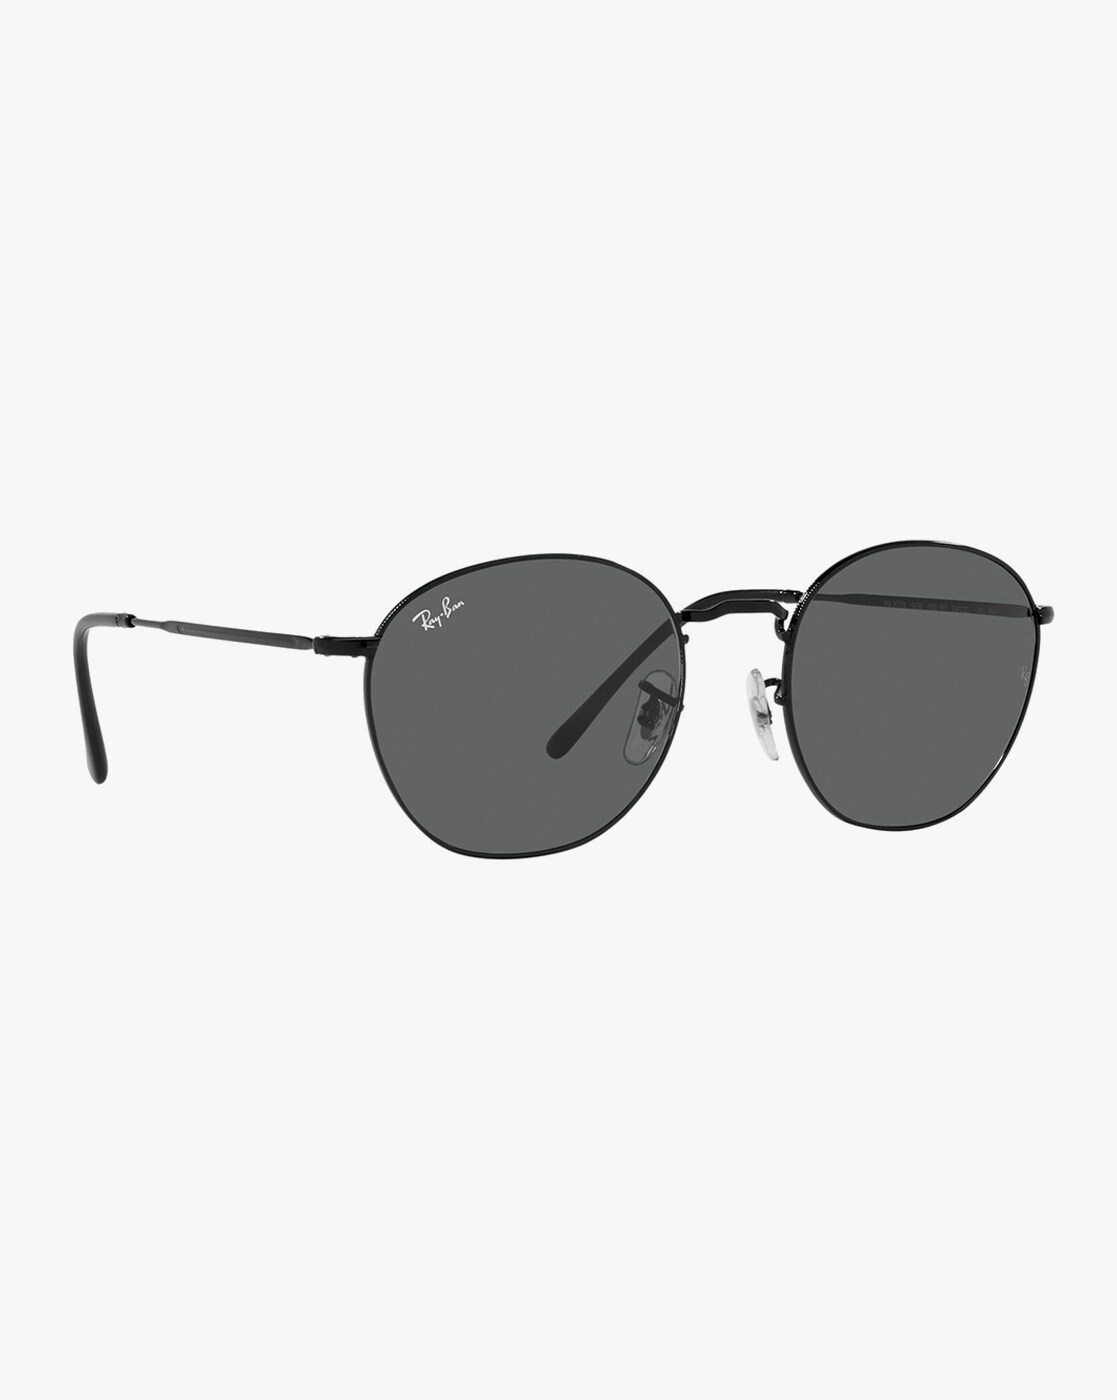 NEW RAY-BAN RB8061 154/71 SUNGLASSES | Sunglasses, Ray bans, Clothes design